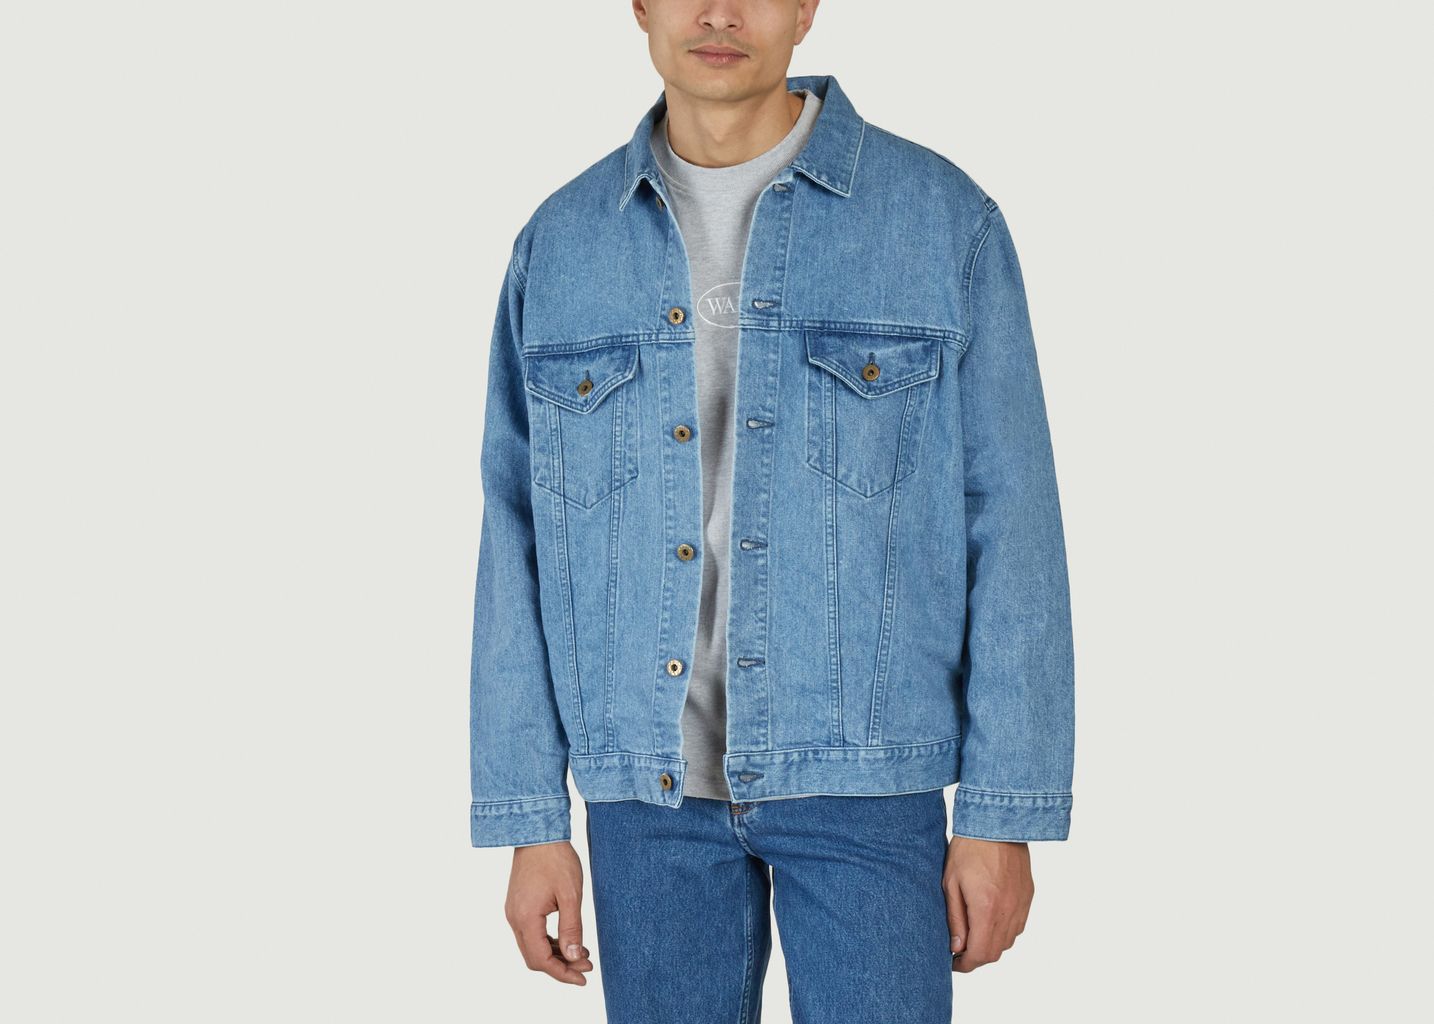 Kouzo faded denim jacket (楮-コウゾ) - Japan Blue Jeans